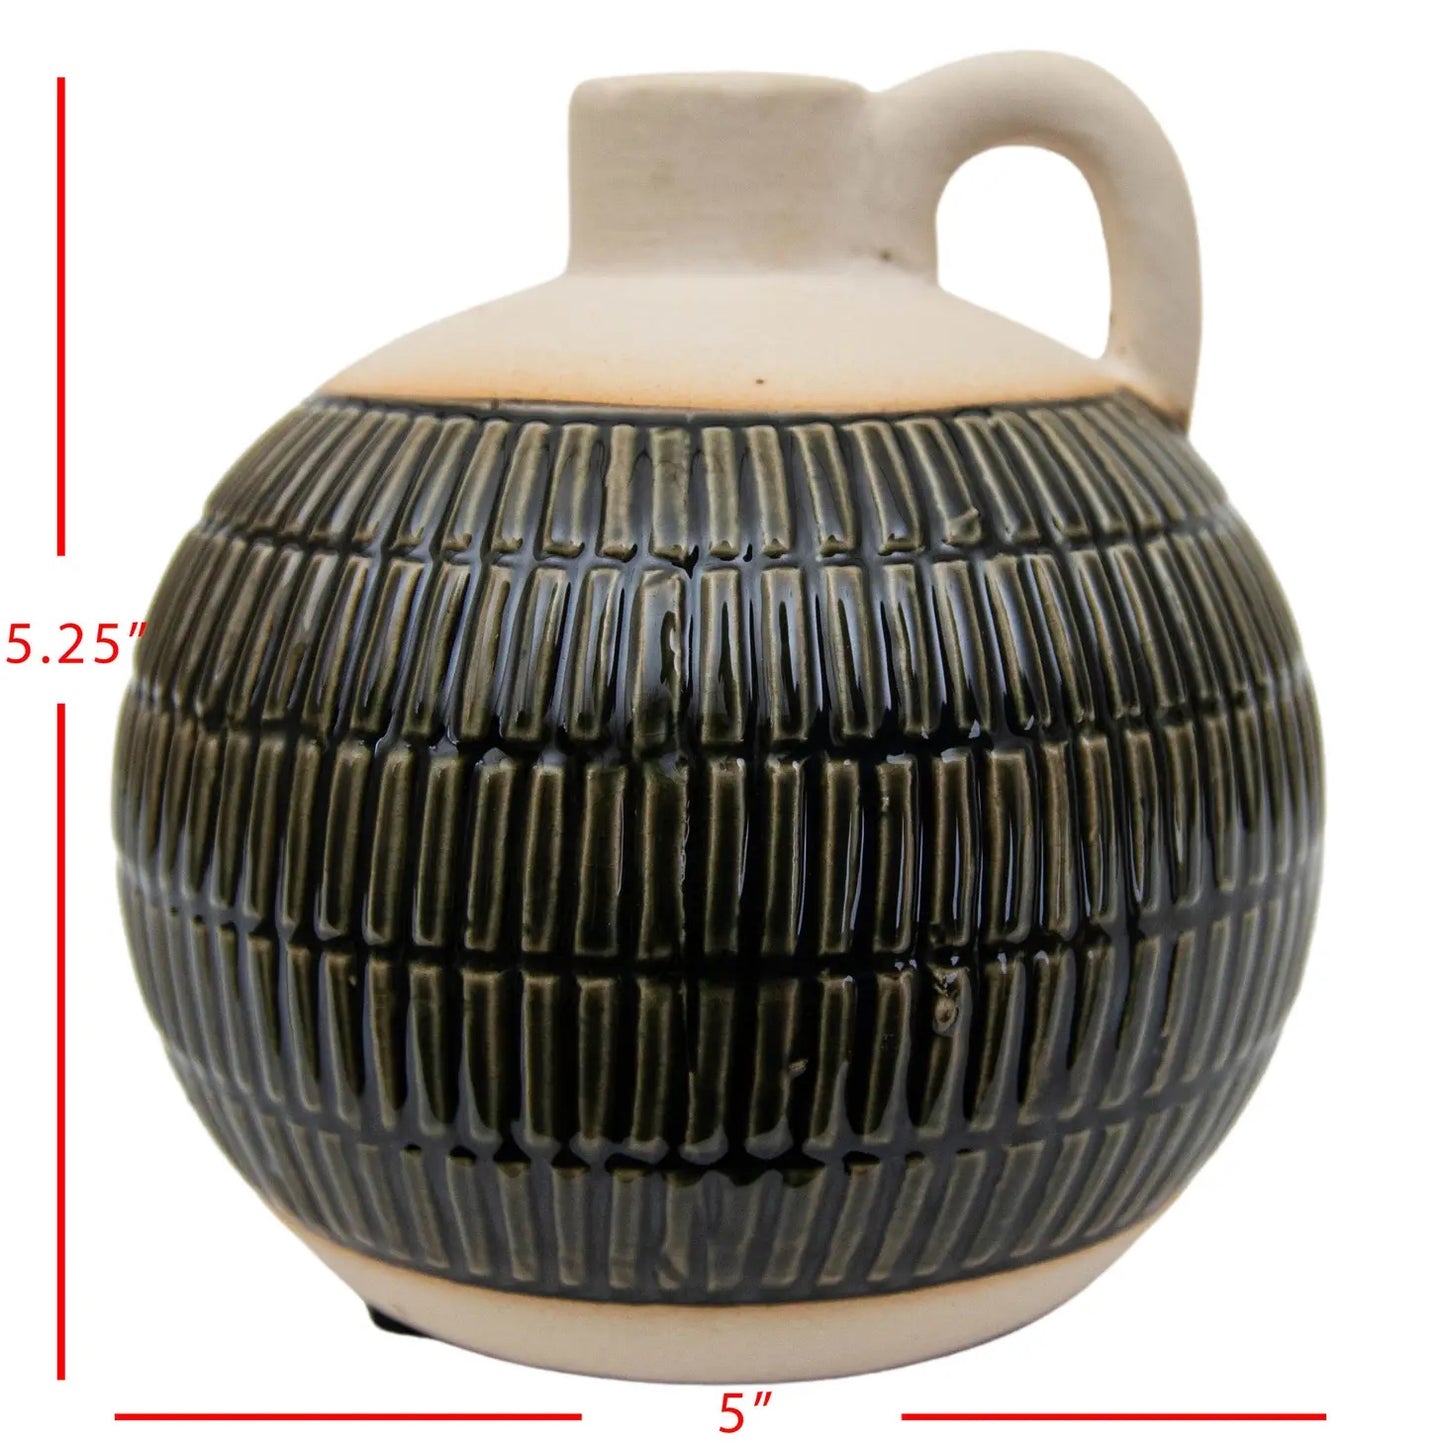 Sage Pitcher Vase